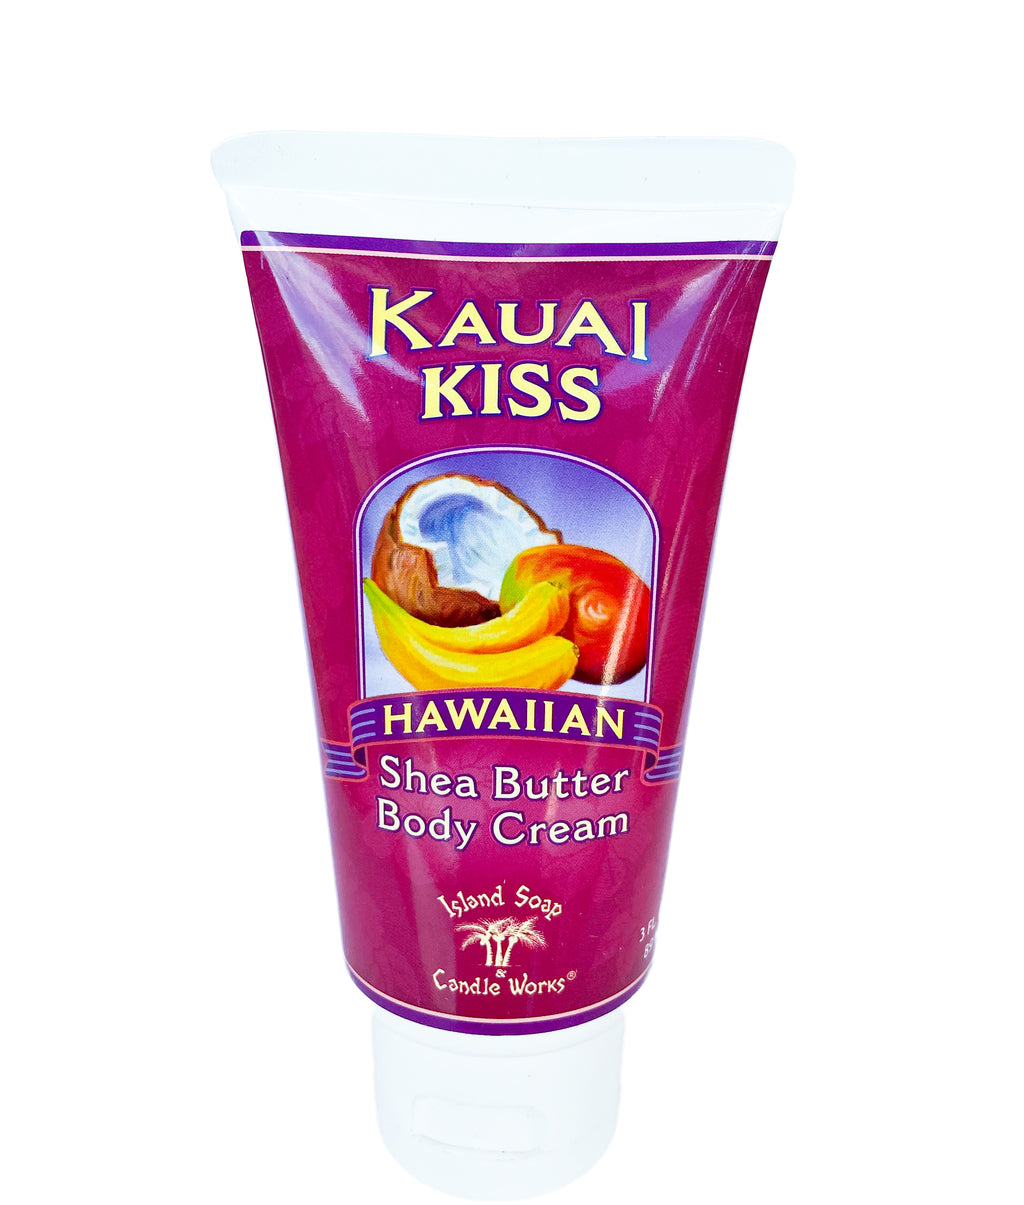 Kauai Kiss - 3 oz. Shea Butter Body Cream